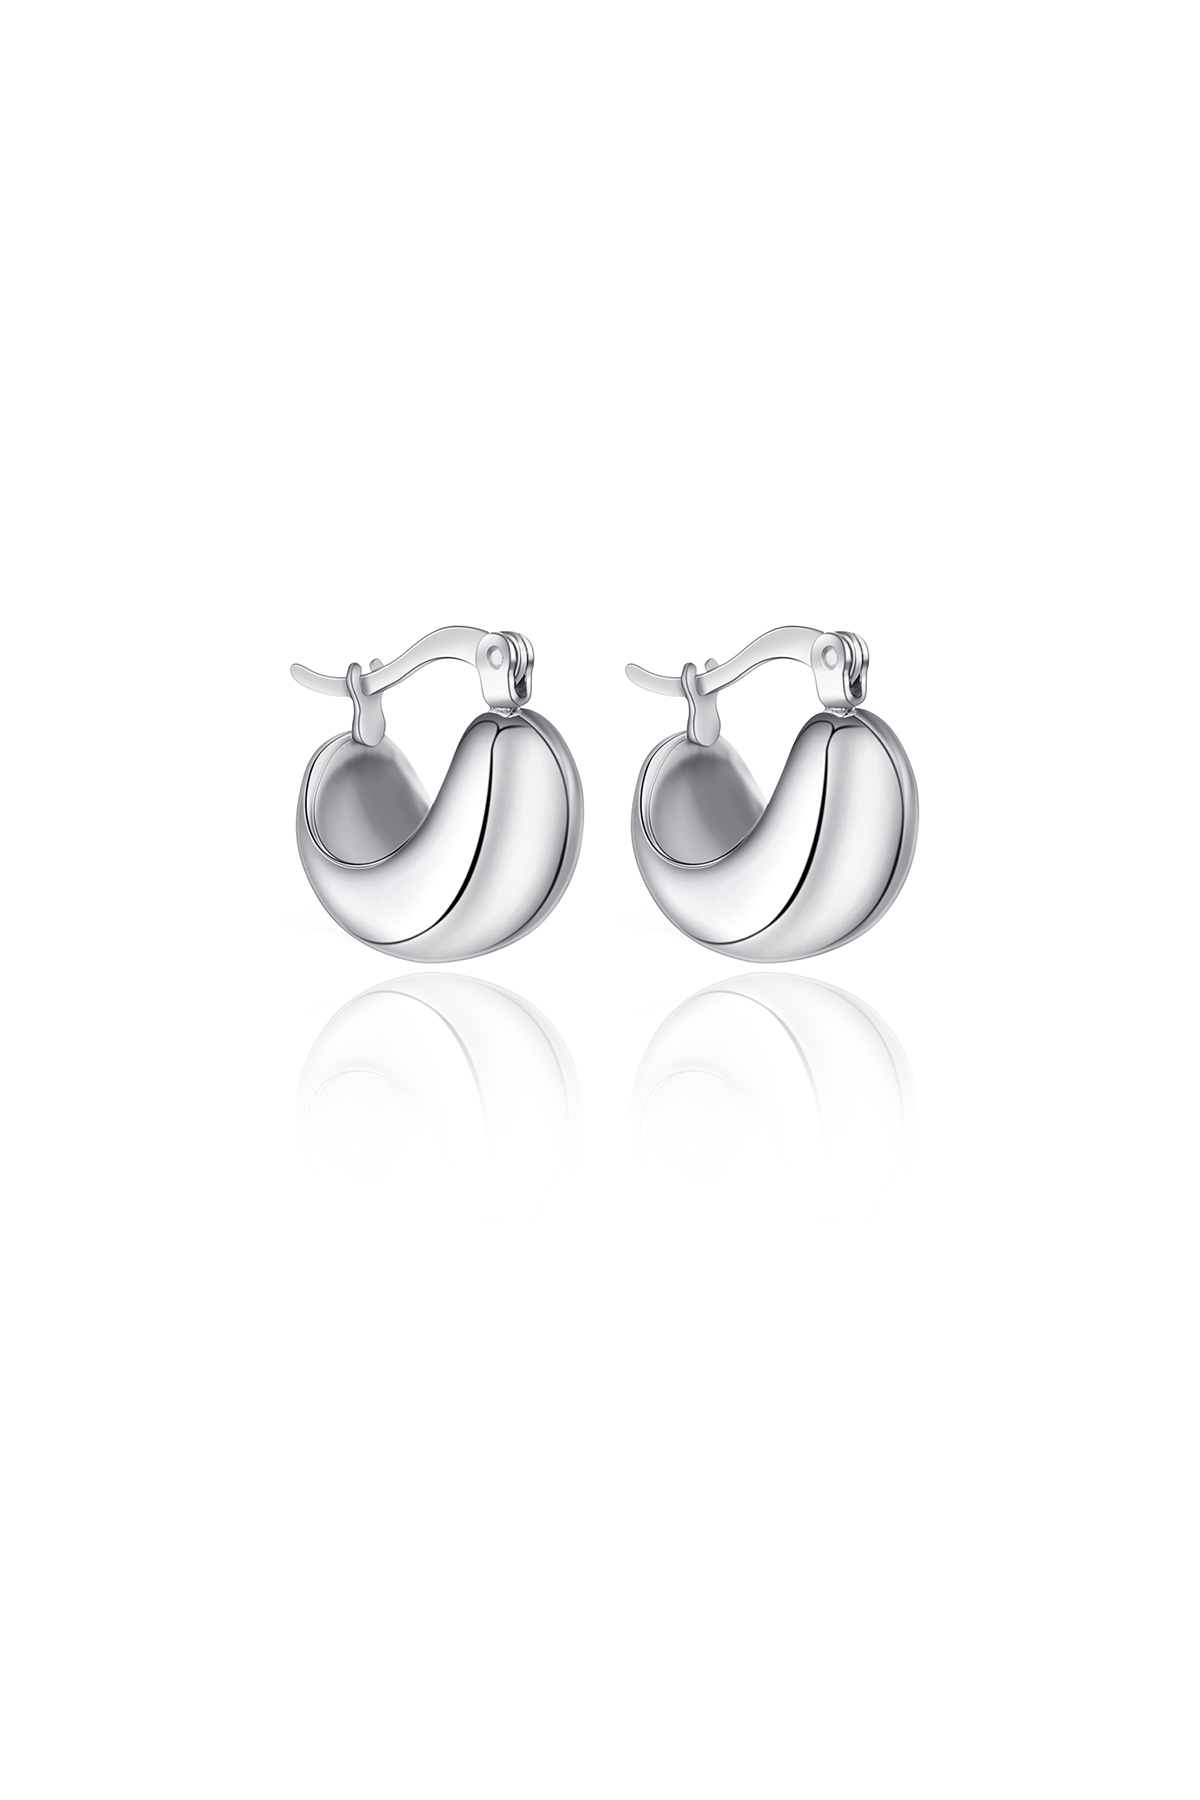 Hammock hoop earrings, Silver